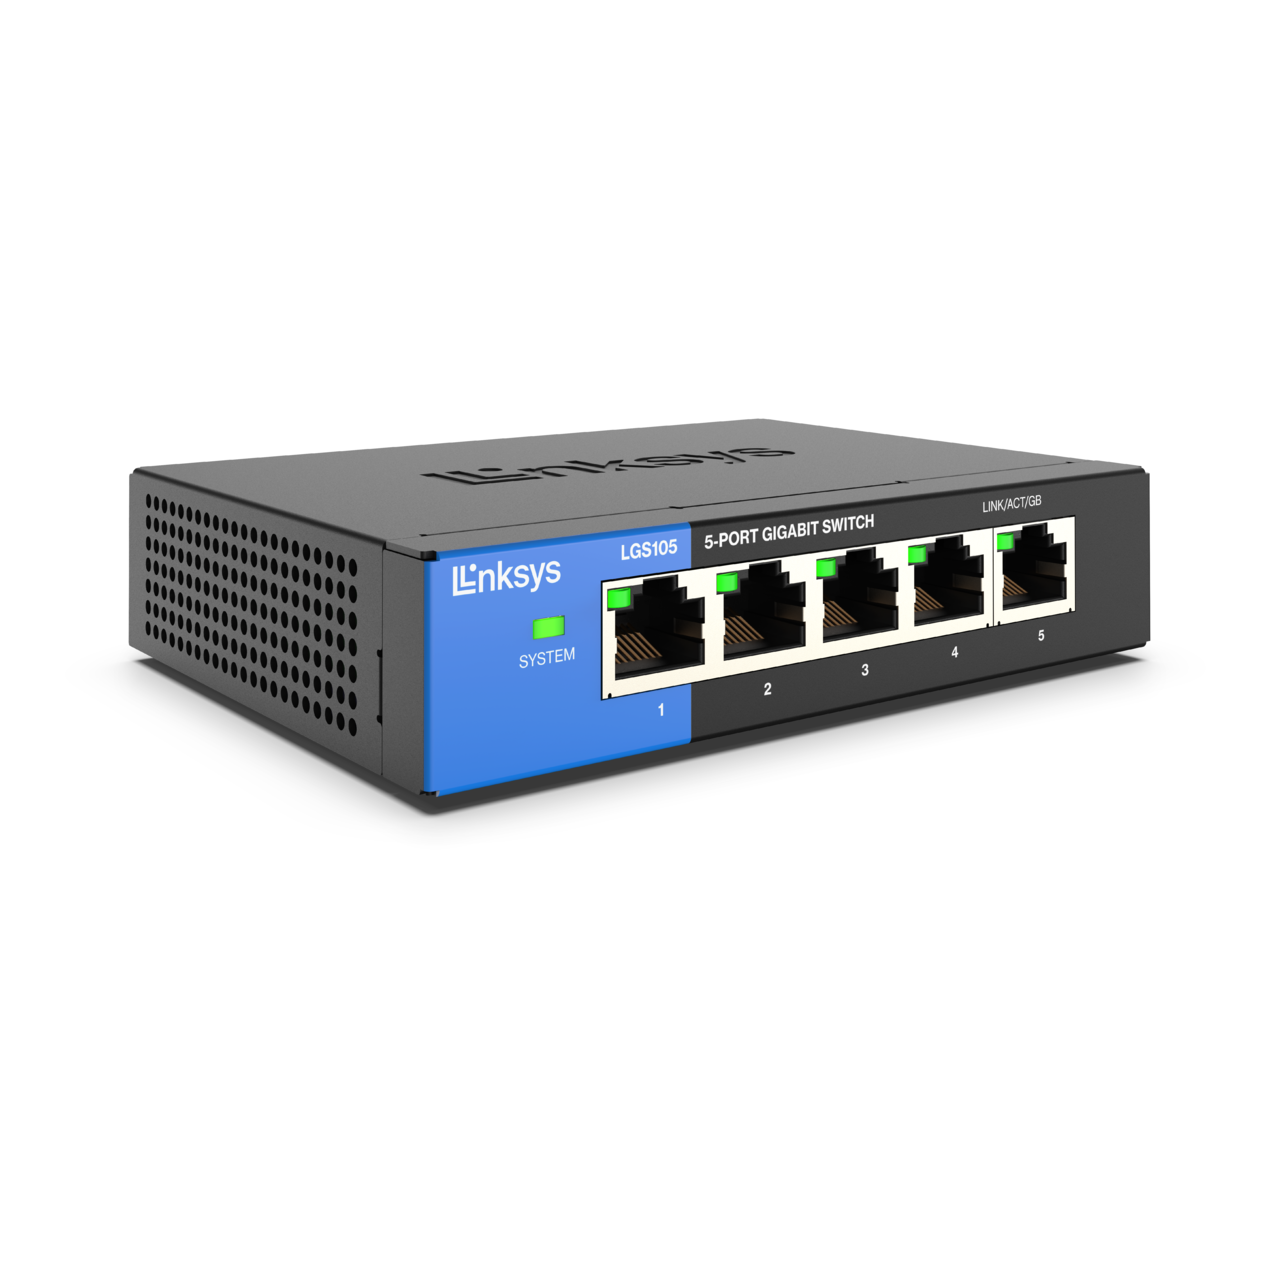 Switch RJ45 5 ports Gigabit Ethernet Noir - METRONIC - RES495580METRON 